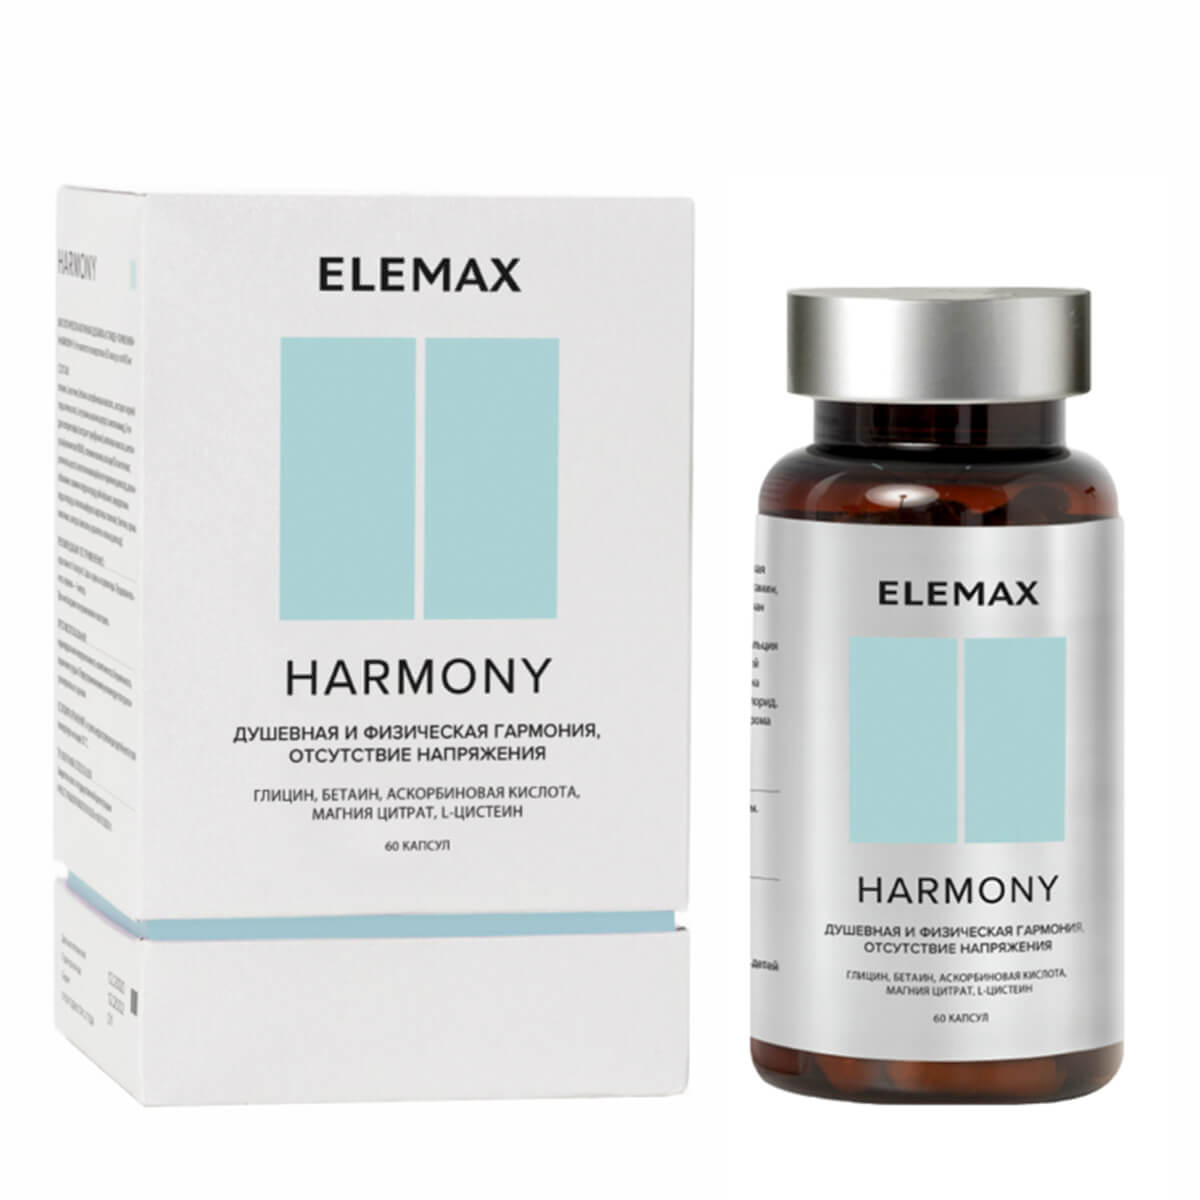 Биологически активная добавка к пище "Гармония", капсулы 60 шт по 400 мг, Elemax - фото 1